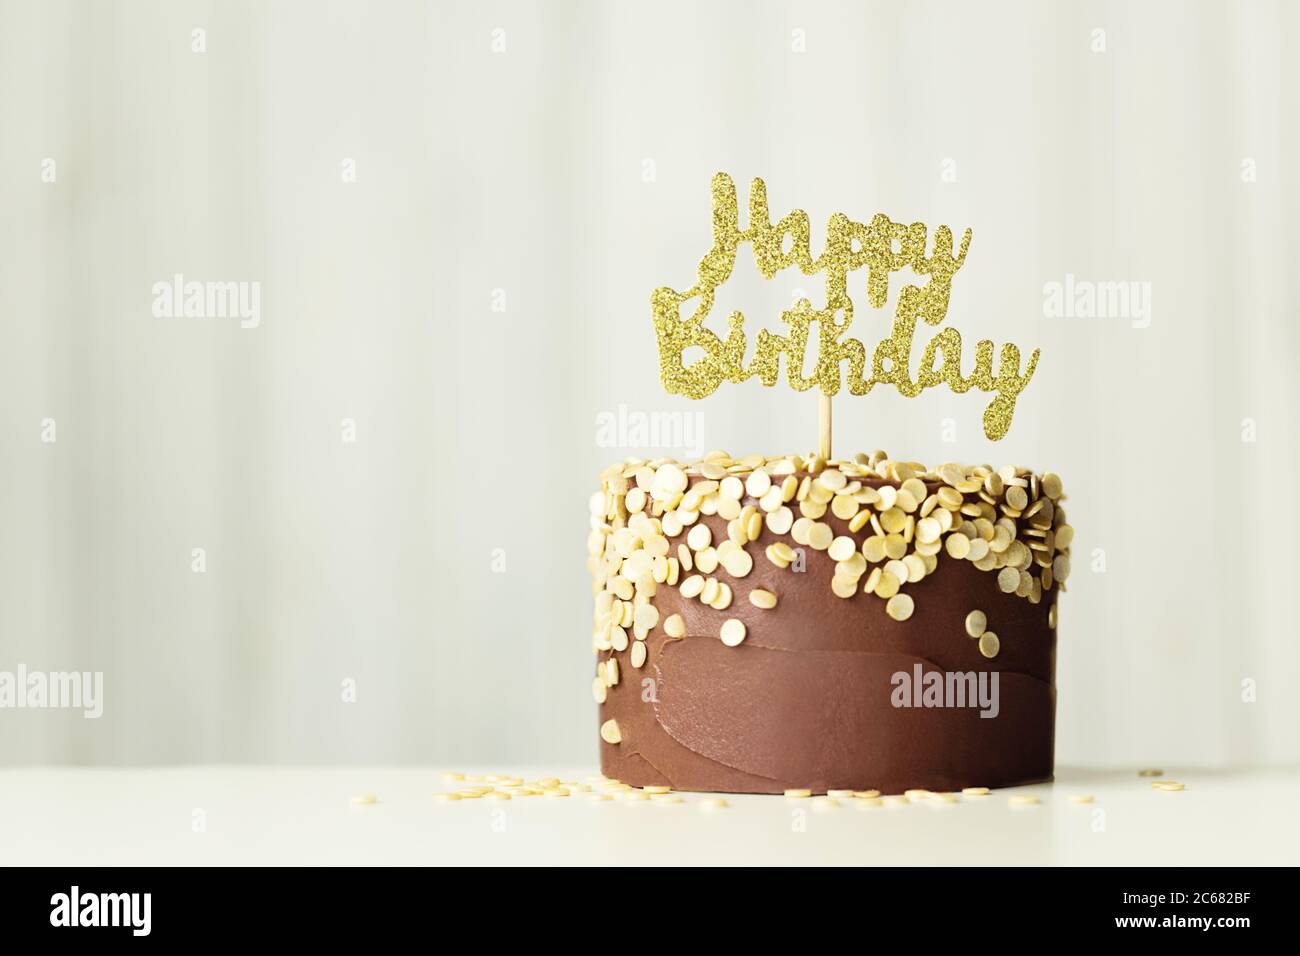 Schokoladen-Geburtstagskuchen mit goldenem 'Happy Birthday'-Schild Stockfoto